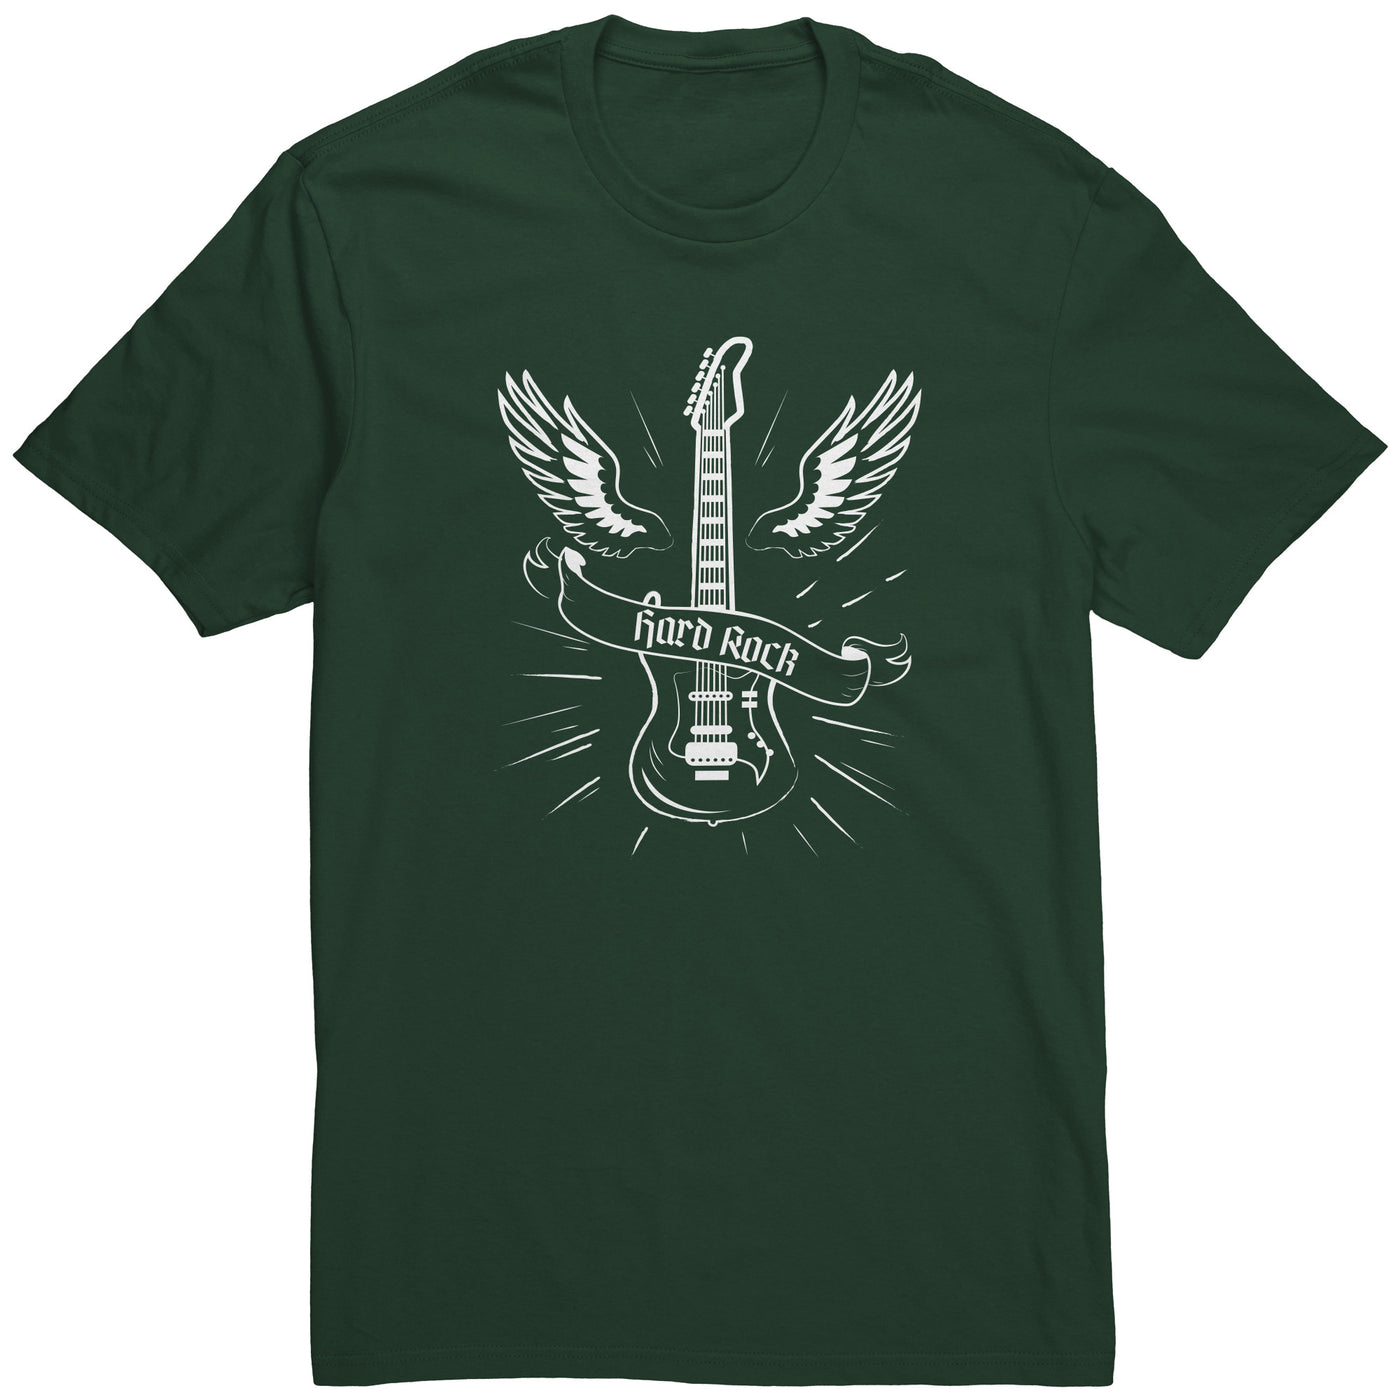 Hard Rock Guitar With Wings Tee Shirt